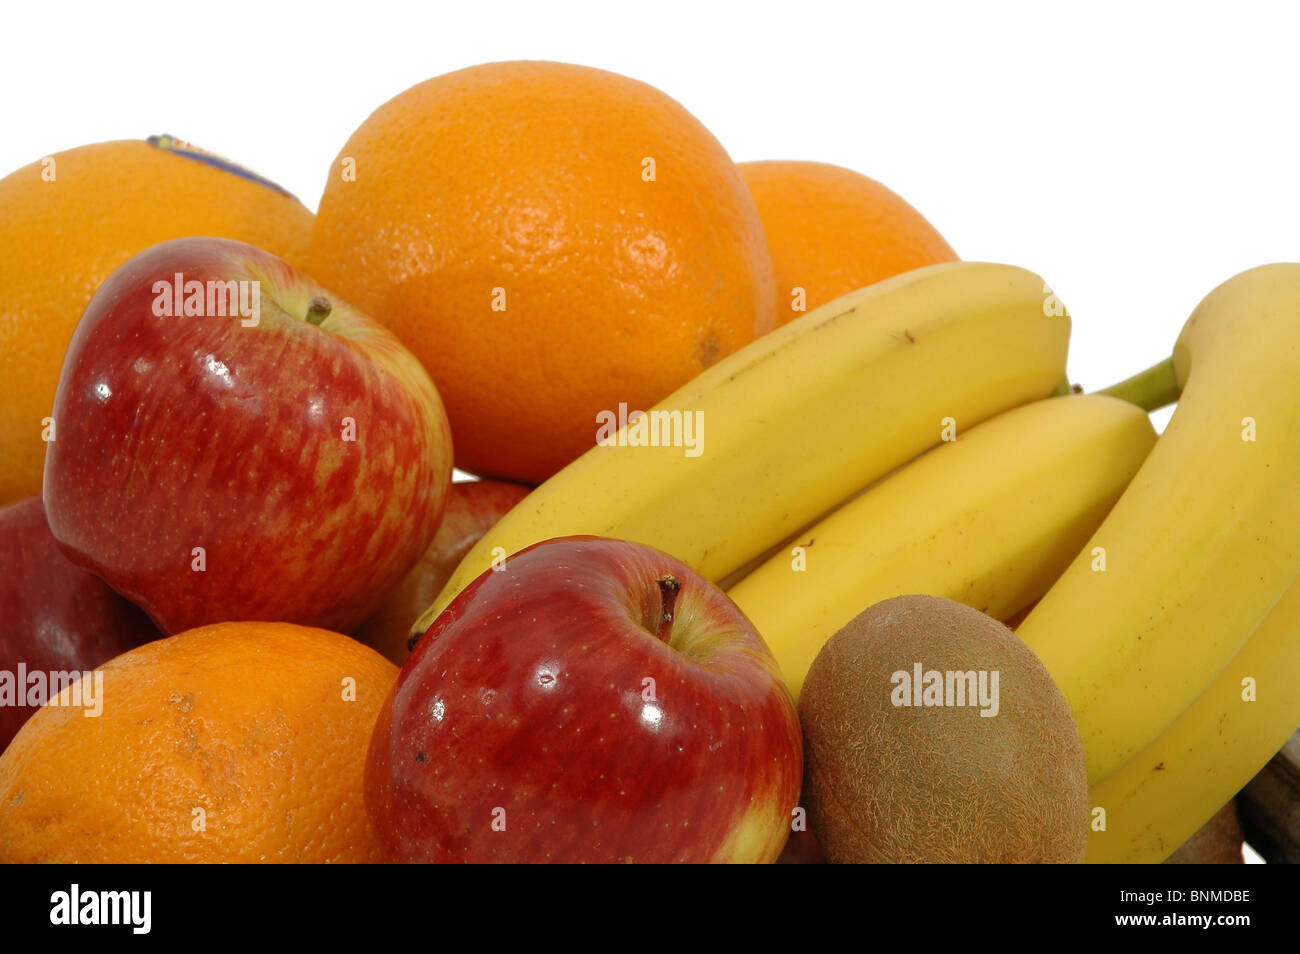 Pile Of Fruits On White Background Oranges Apples Bananas And Kiwis